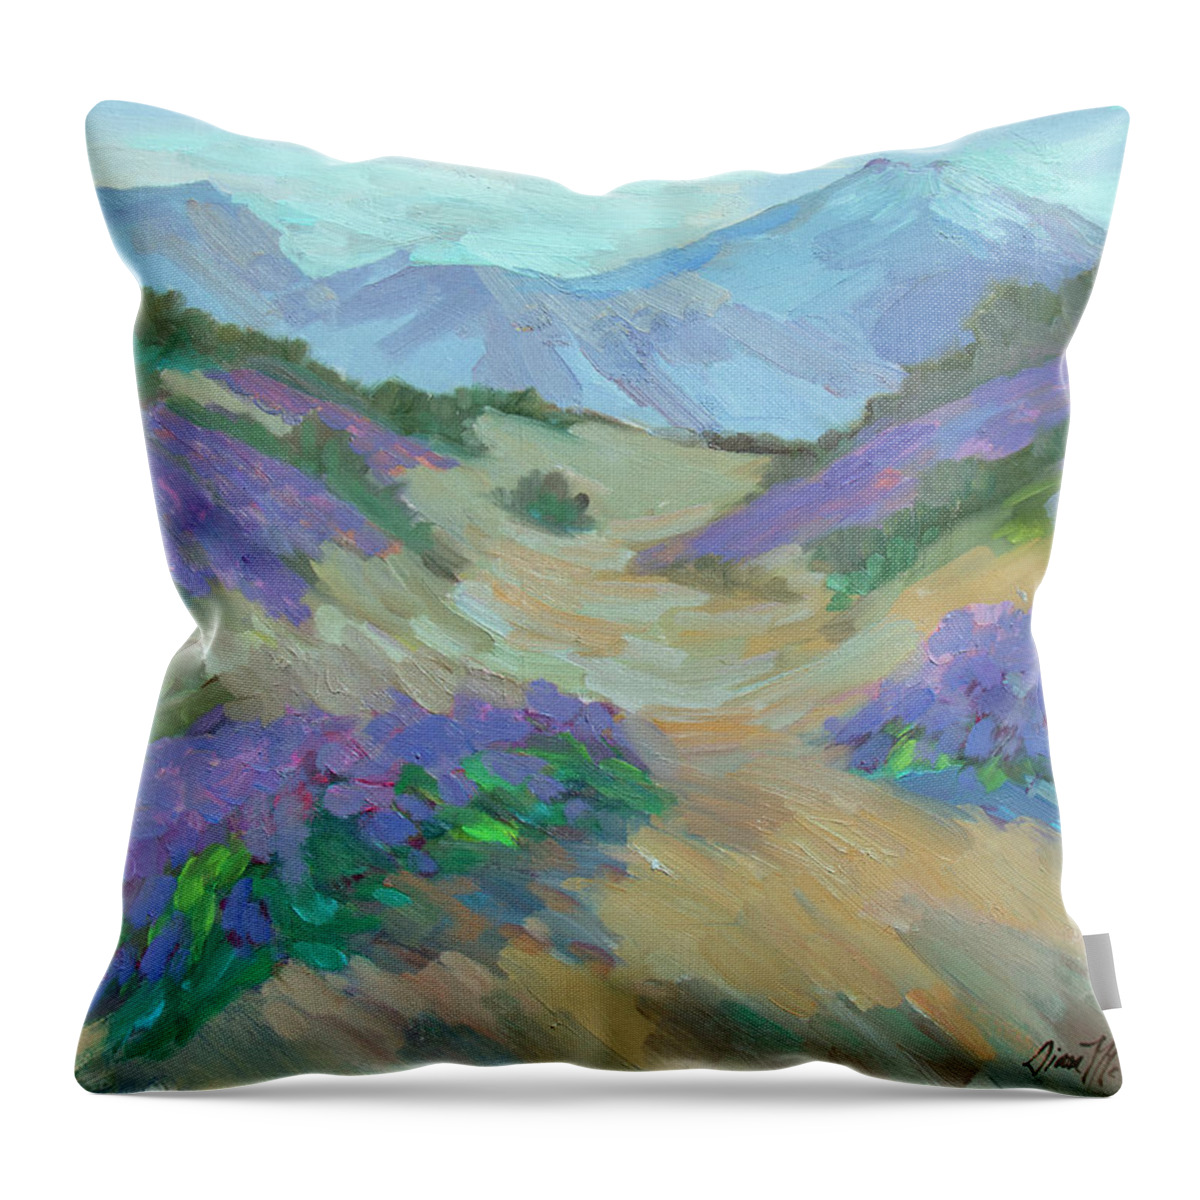 Desert Throw Pillow featuring the painting Desert Verbena by Diane McClary